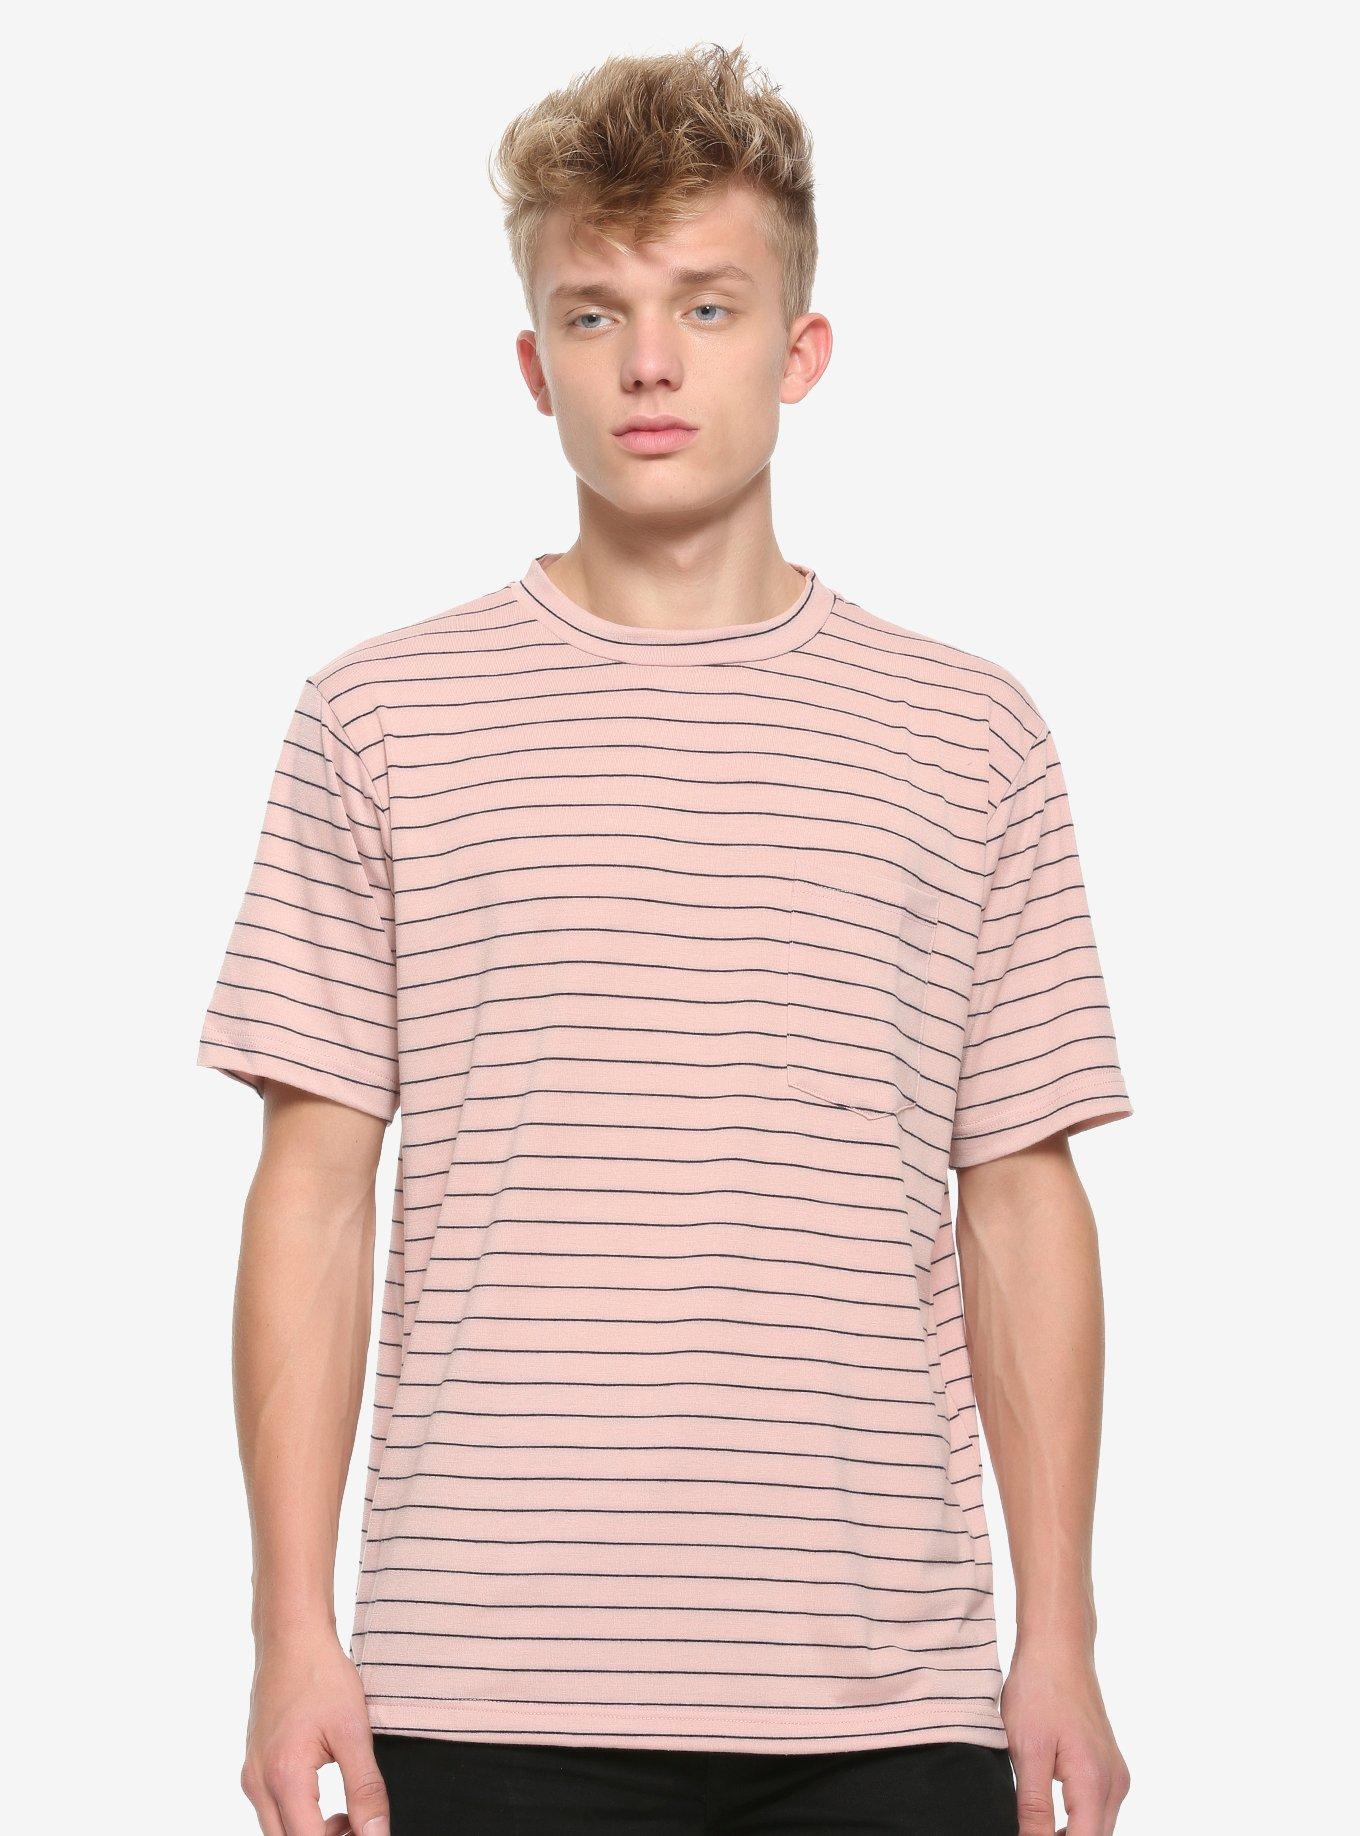 Pink & Black Striped Pocket T-Shirt, PINK, alternate